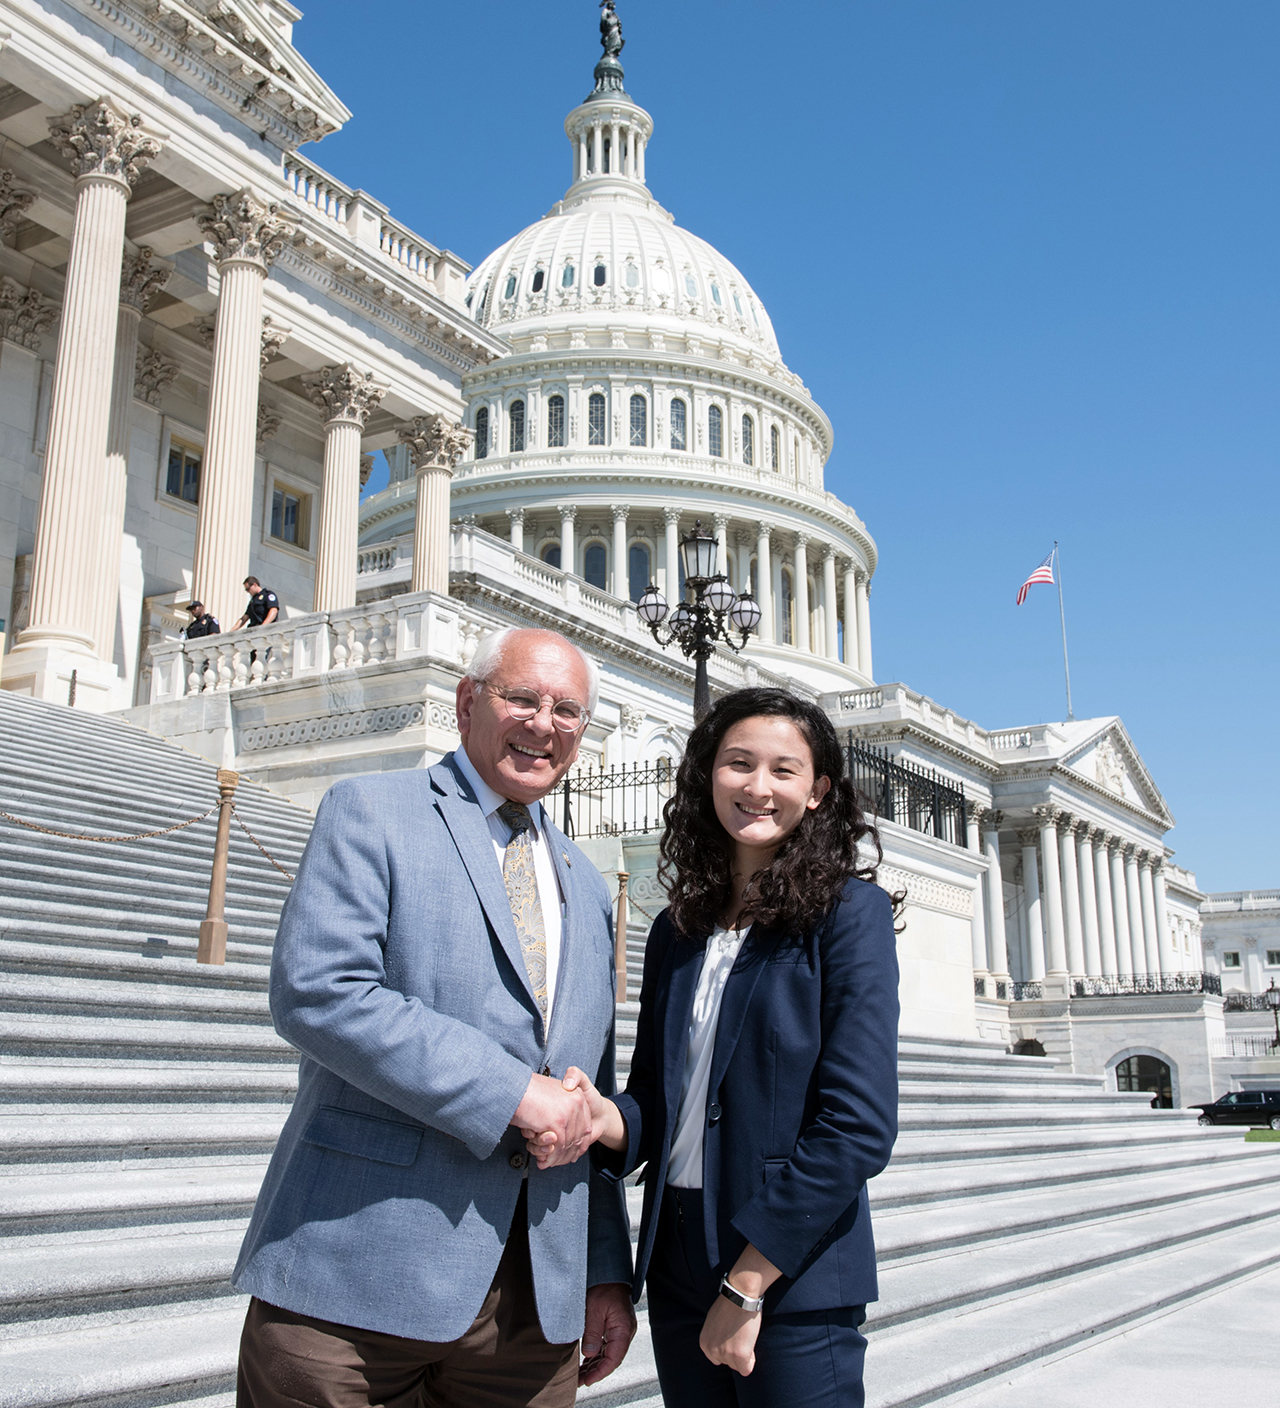 Sara Conroy shakes the hand of congressman Paul Tonko, on steps of Capitol in Washington, D.C.